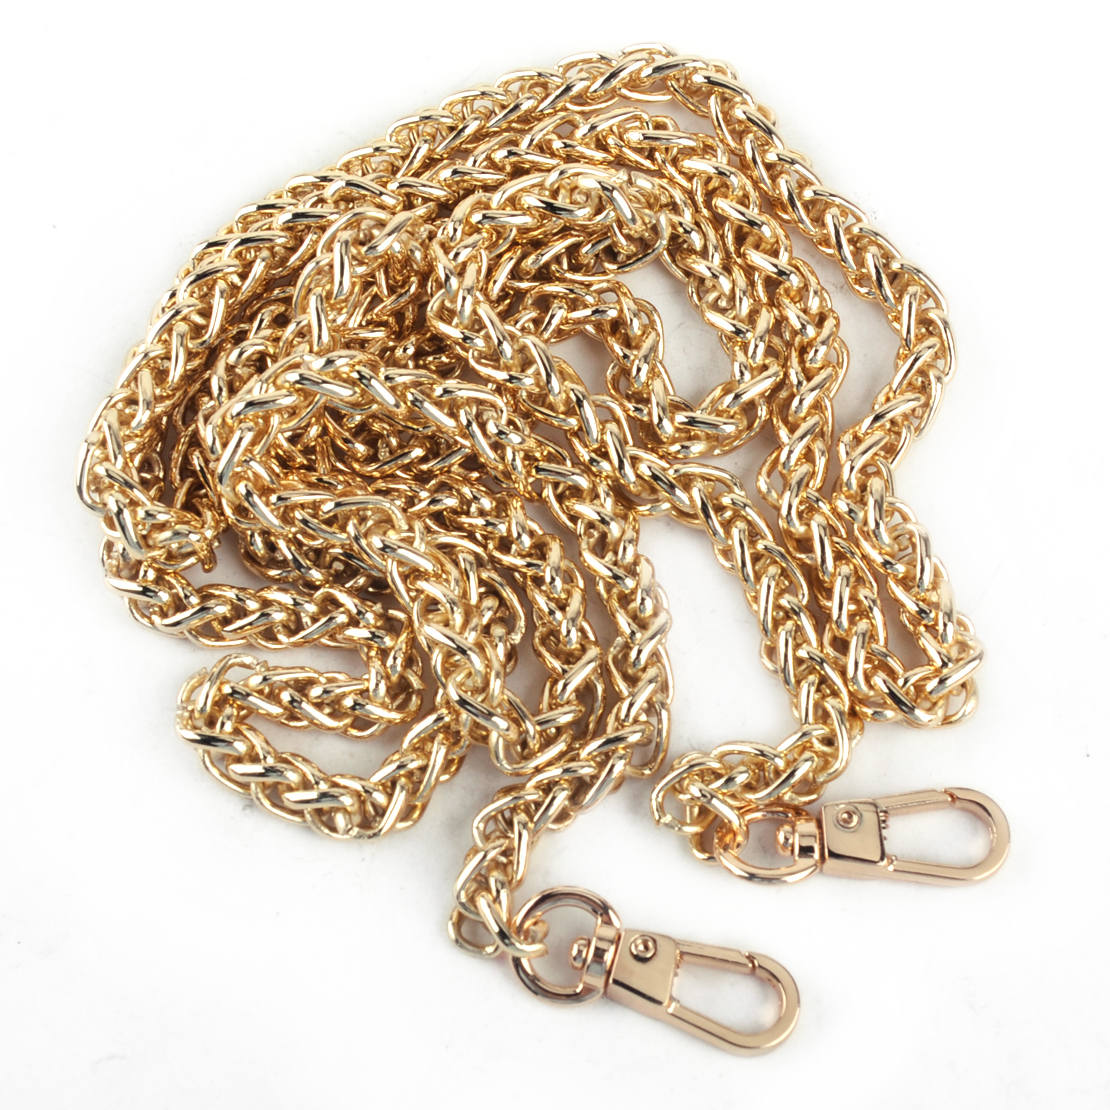 Metal Purse Chain Strap Handle Shoulder Crossbody Bag Handbag Replace 60-140cm | eBay